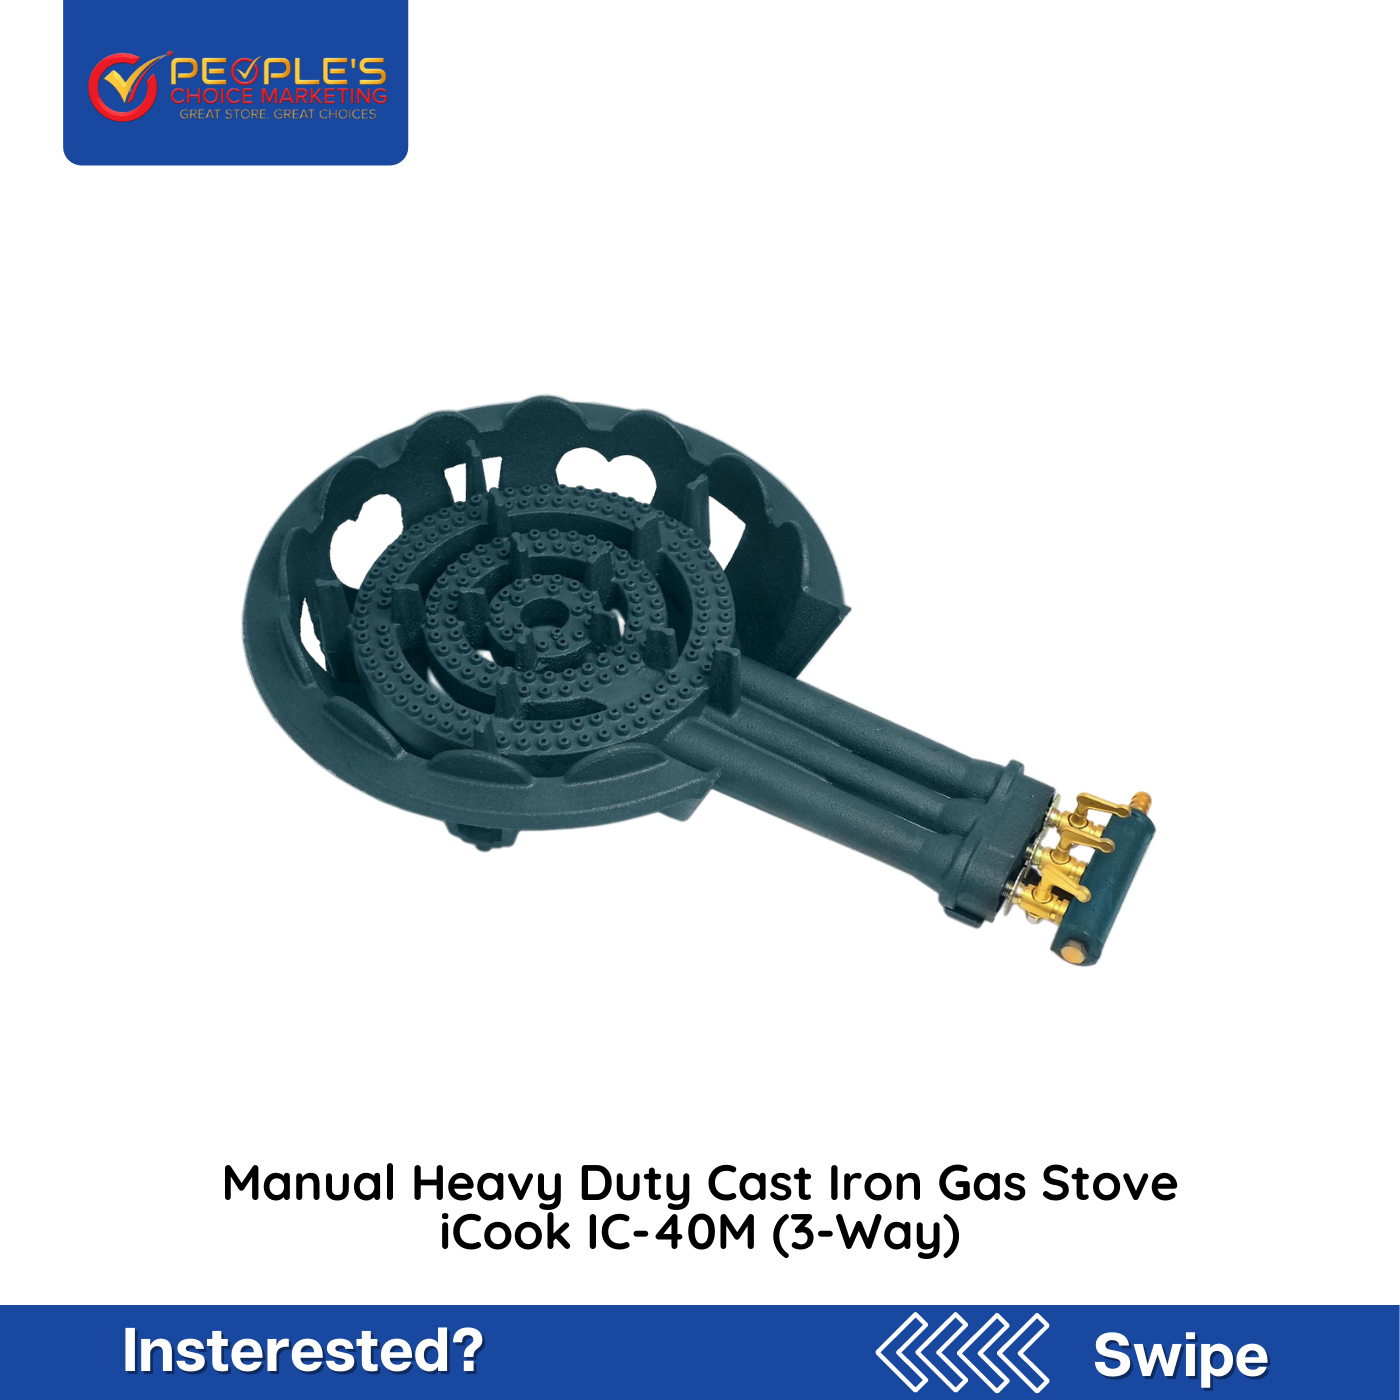 Manual Heavy Duty Cast Iron Gas Stove - People's Choice Marketing